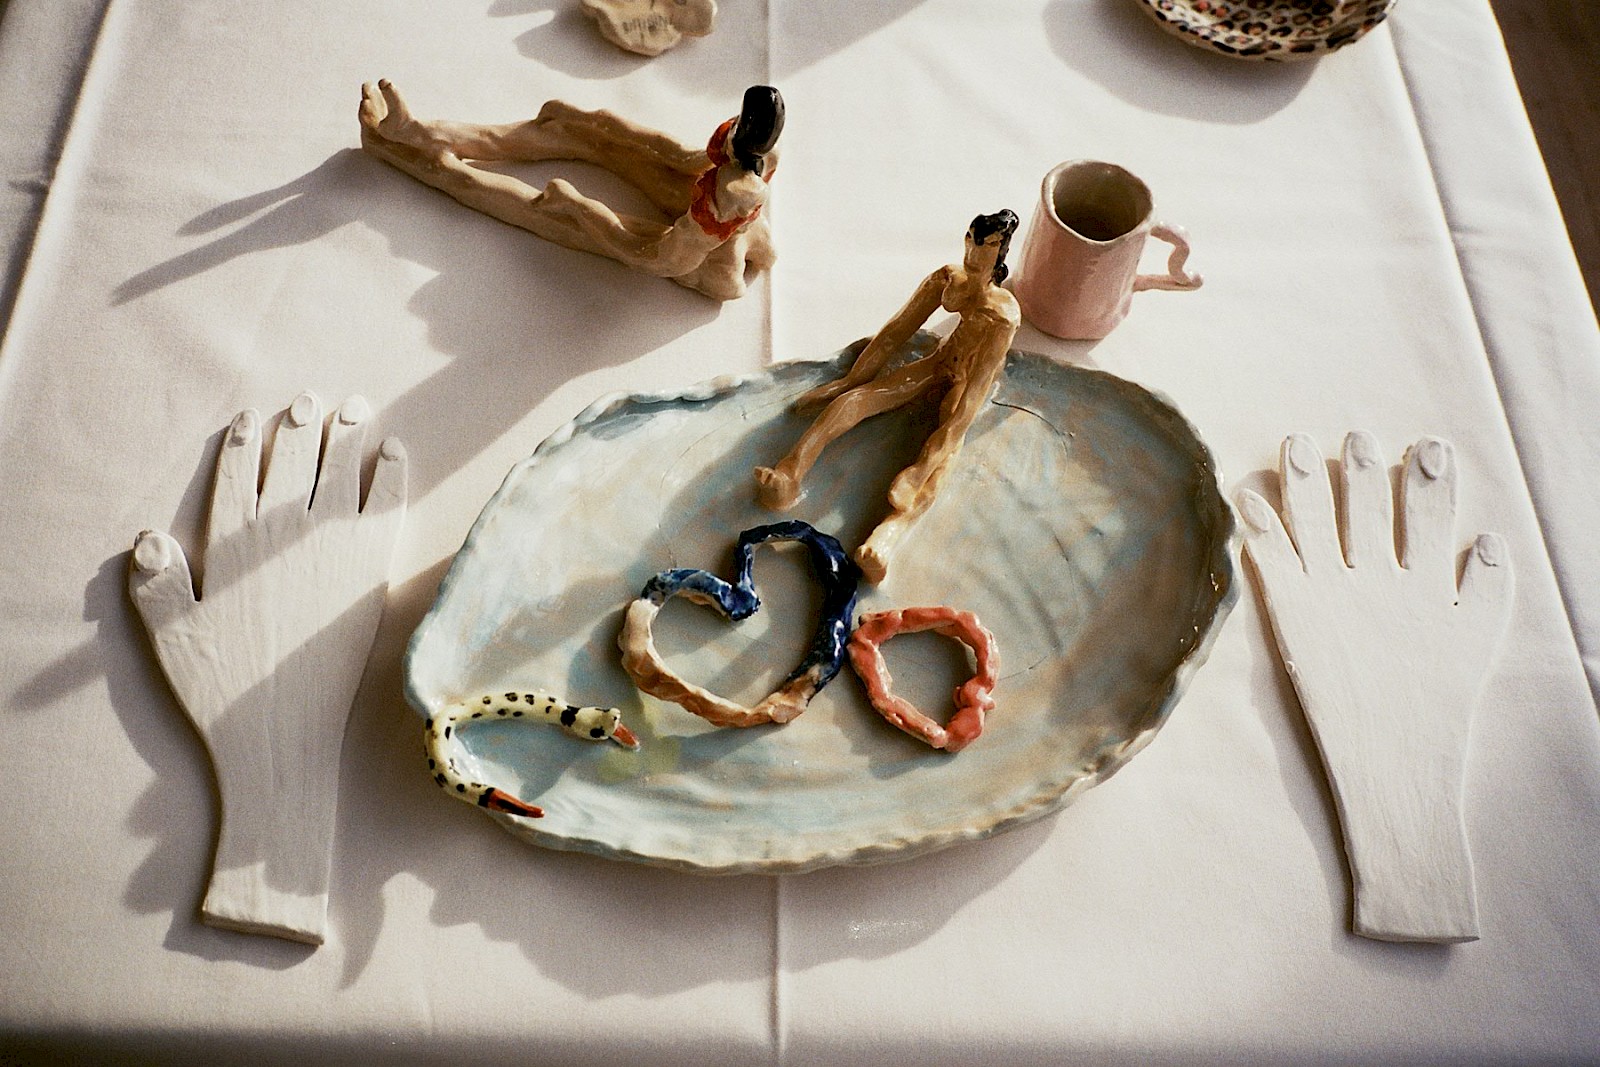 Image - Ceramics by Heinz Lauener